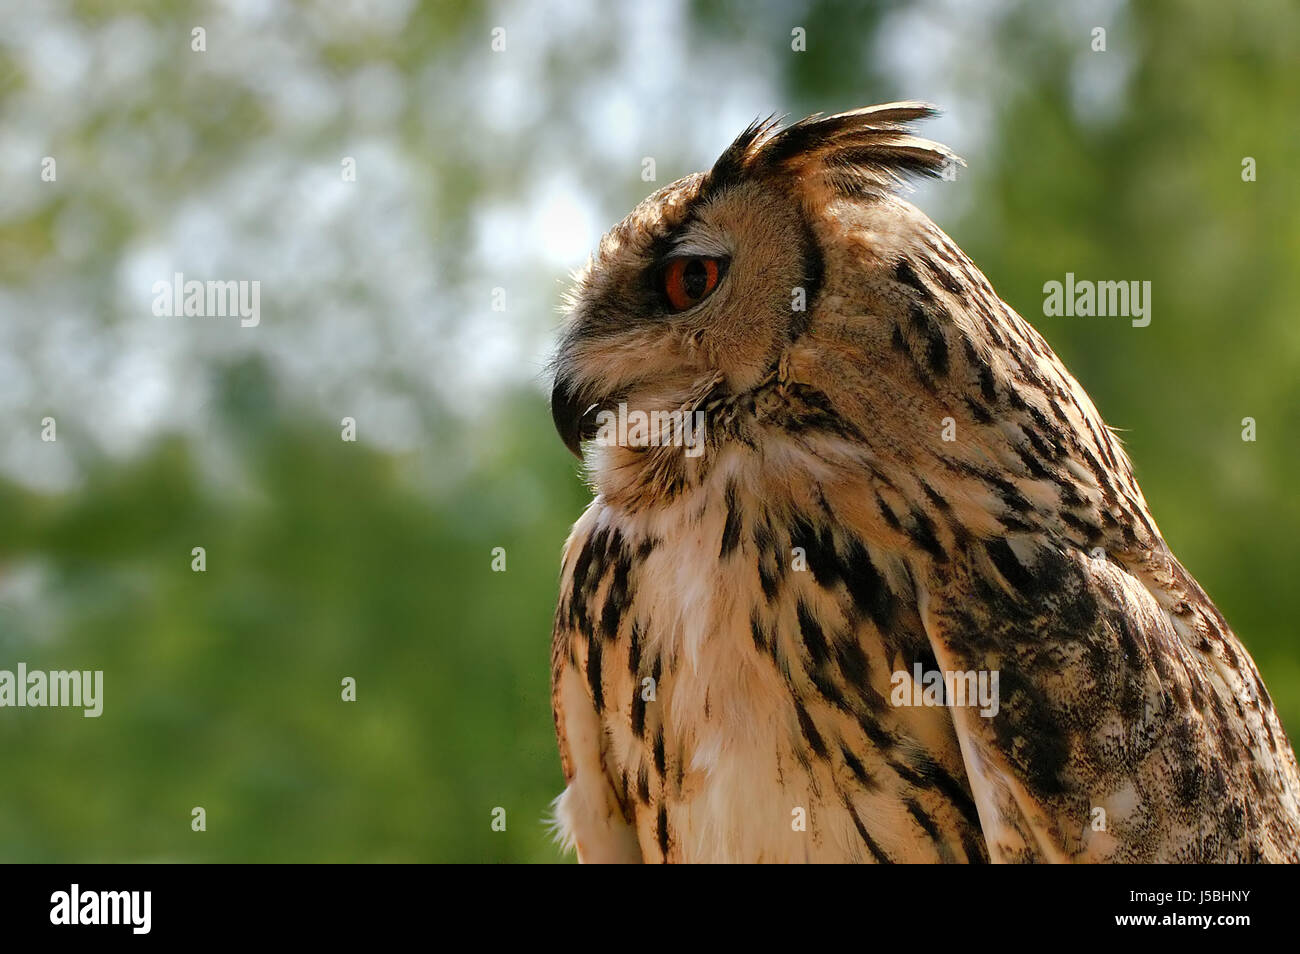 bird birds owl owls eagle-owl aves neukiefervgel neognathae strigiformes Stock Photo